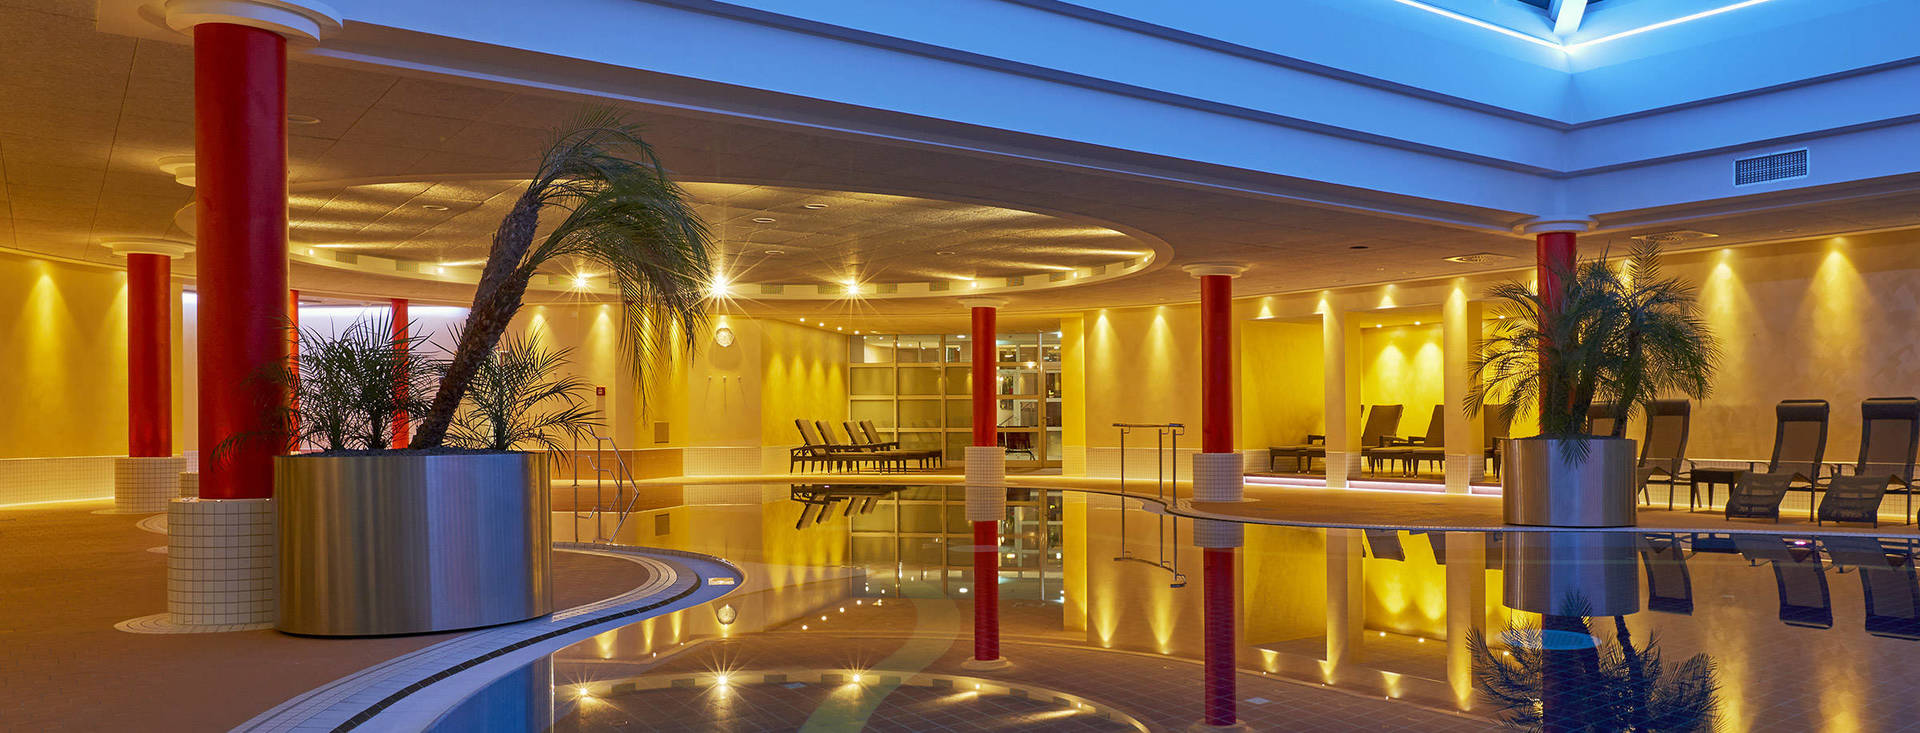 Wellness in the H+ Hotel & Spa Friedrichroda - Official website